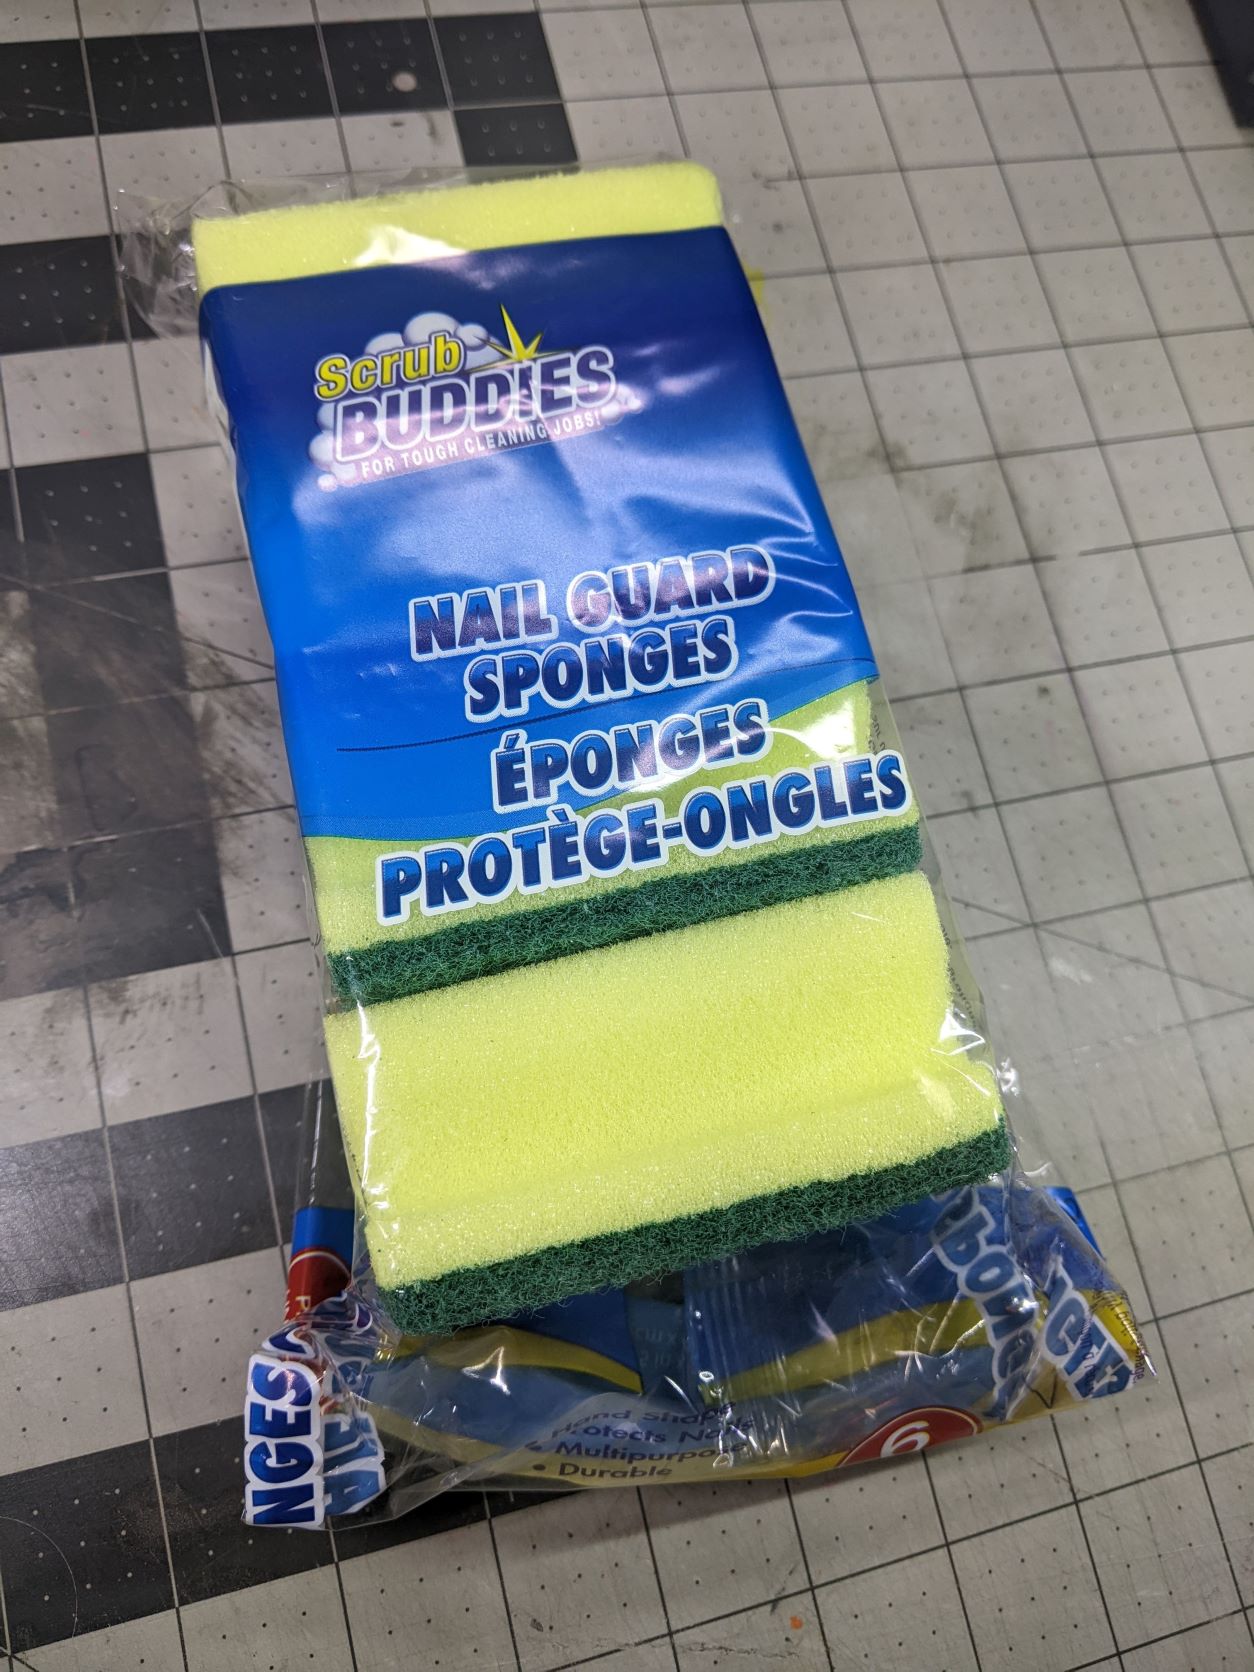 Scrub Buddies 6 Pack of Nail Guard Sponges